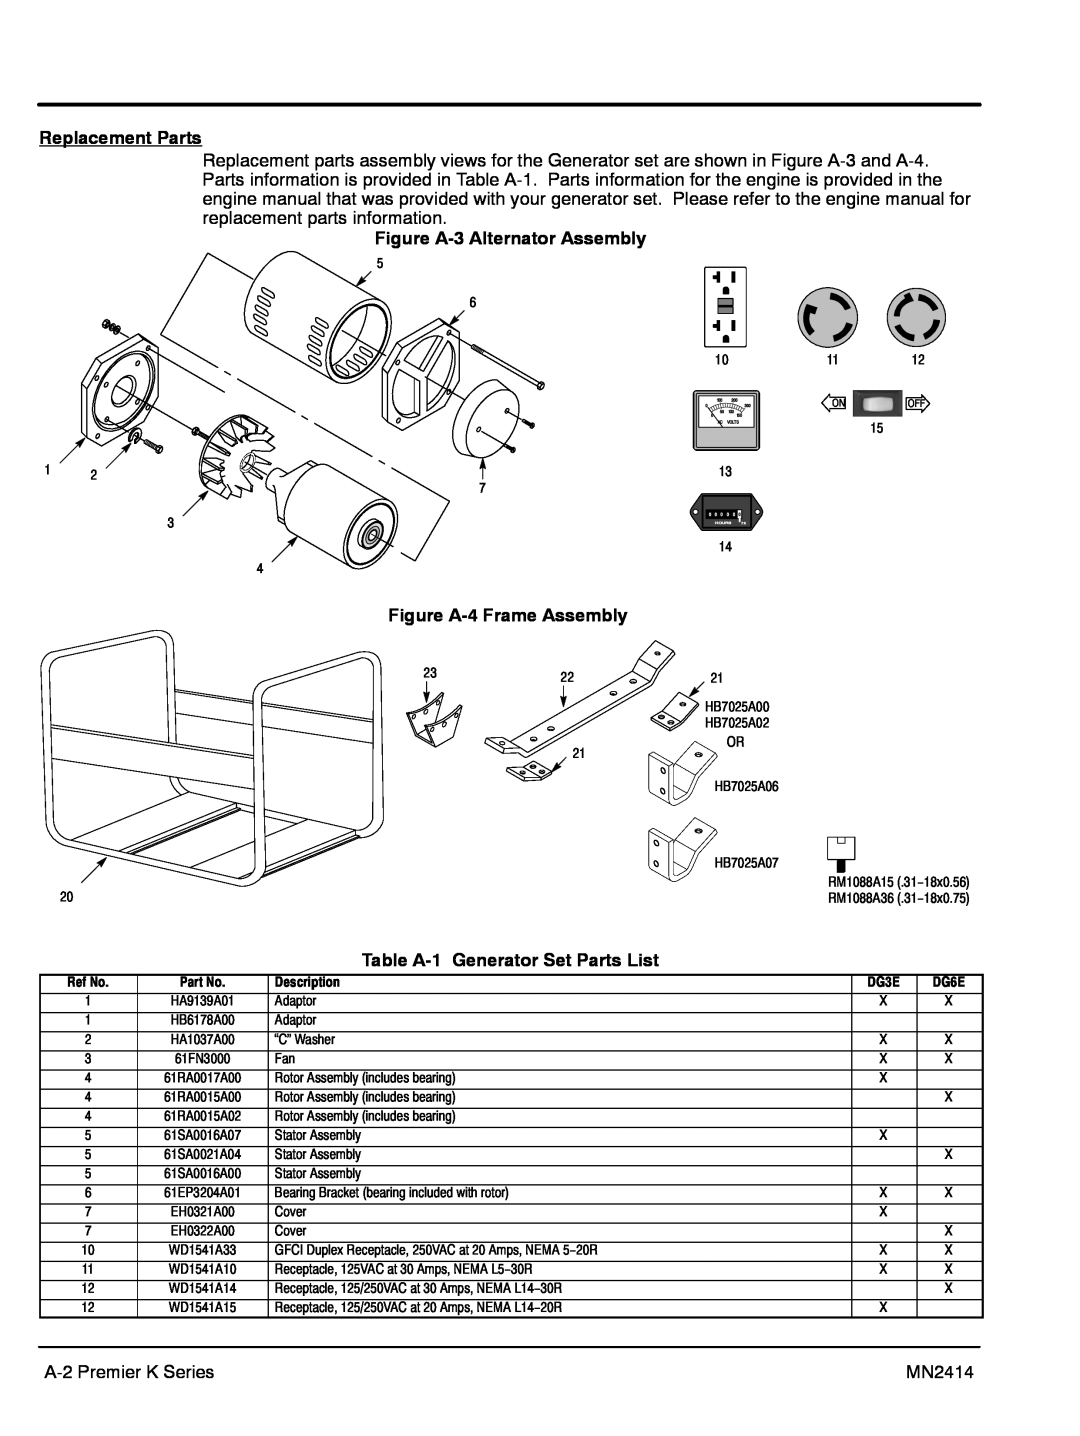 Baldor DG3E, DG6E manual Replacement Parts, Figure A-3 Alternator Assembly, Figure A-4 Frame Assembly 